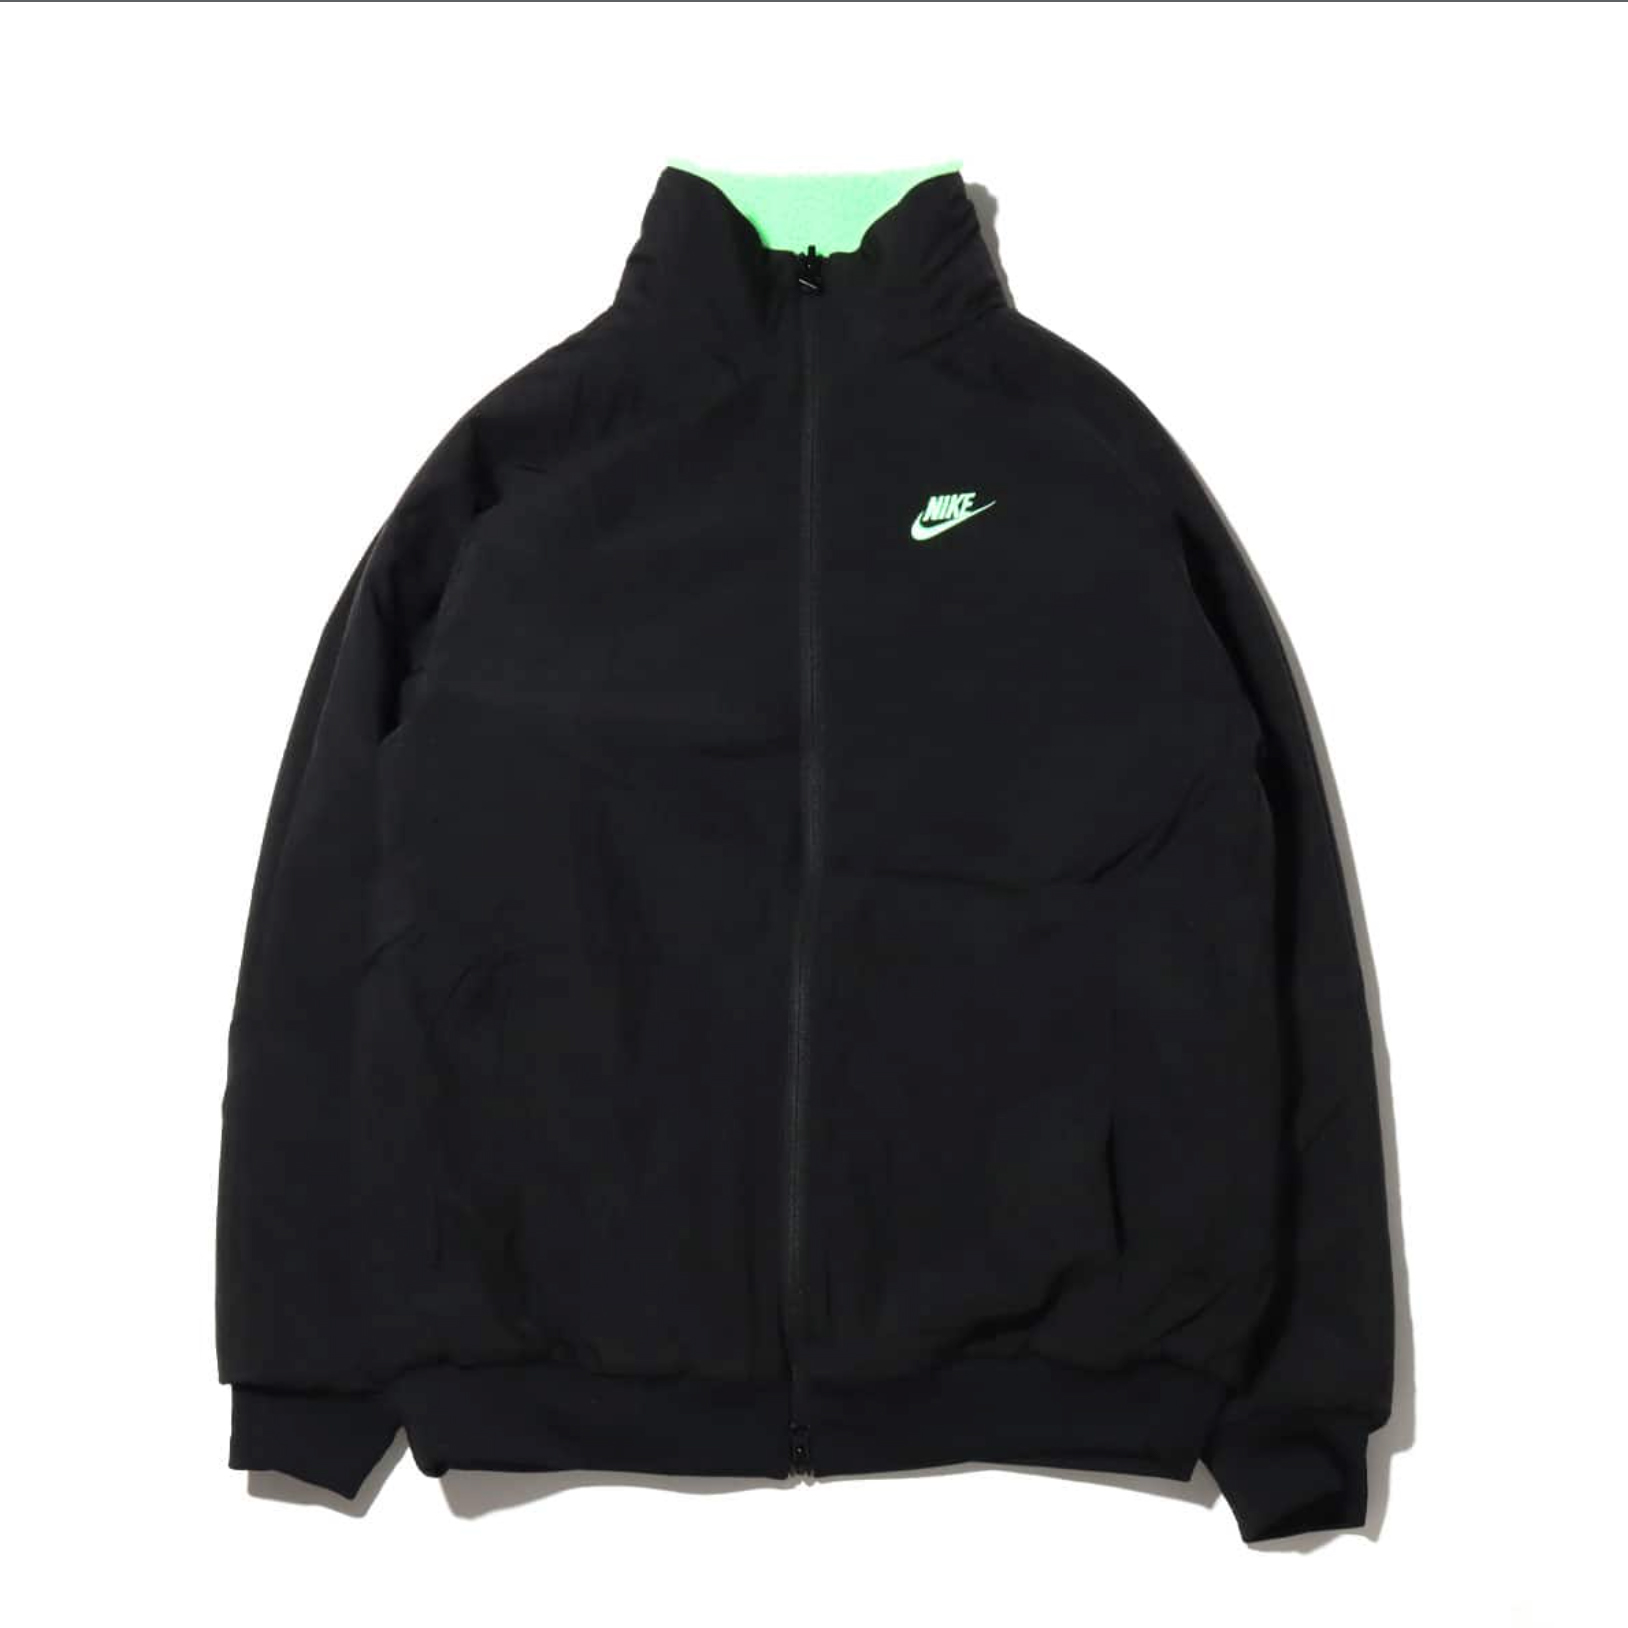 Nike Women's Big Swoosh Reversible Boa Jacket (Asia Sizing) Neon Green